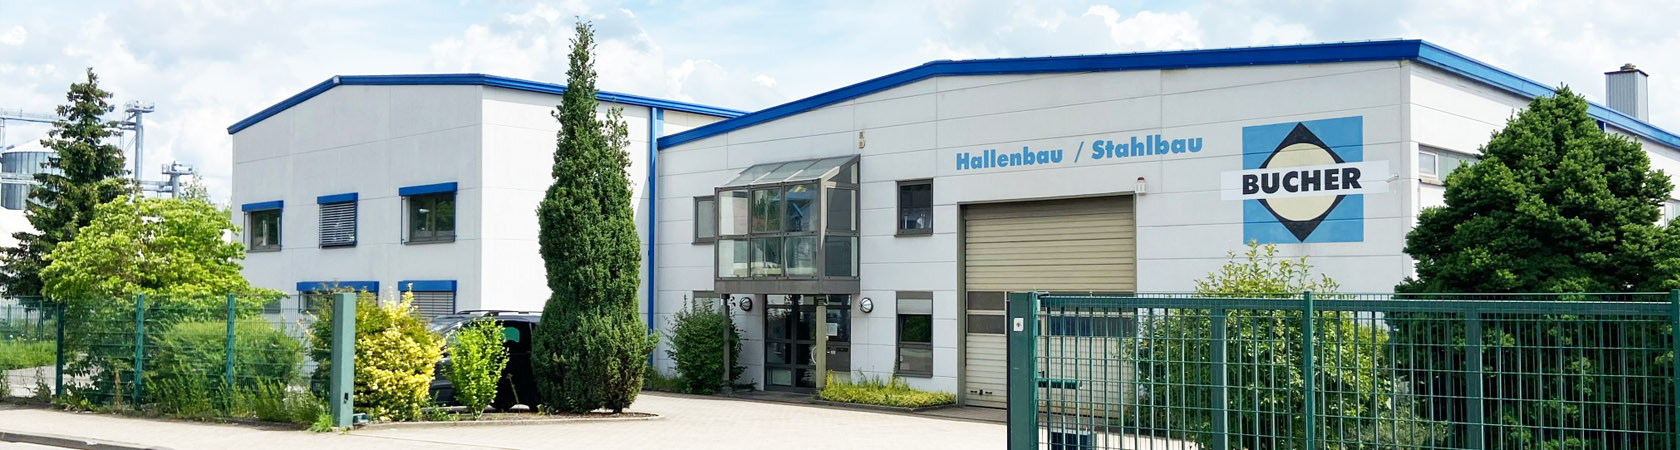 Bucher Metallbautechnik GmbH - Stahlbau, Metallbau, Tankbau & Edelstahldesign